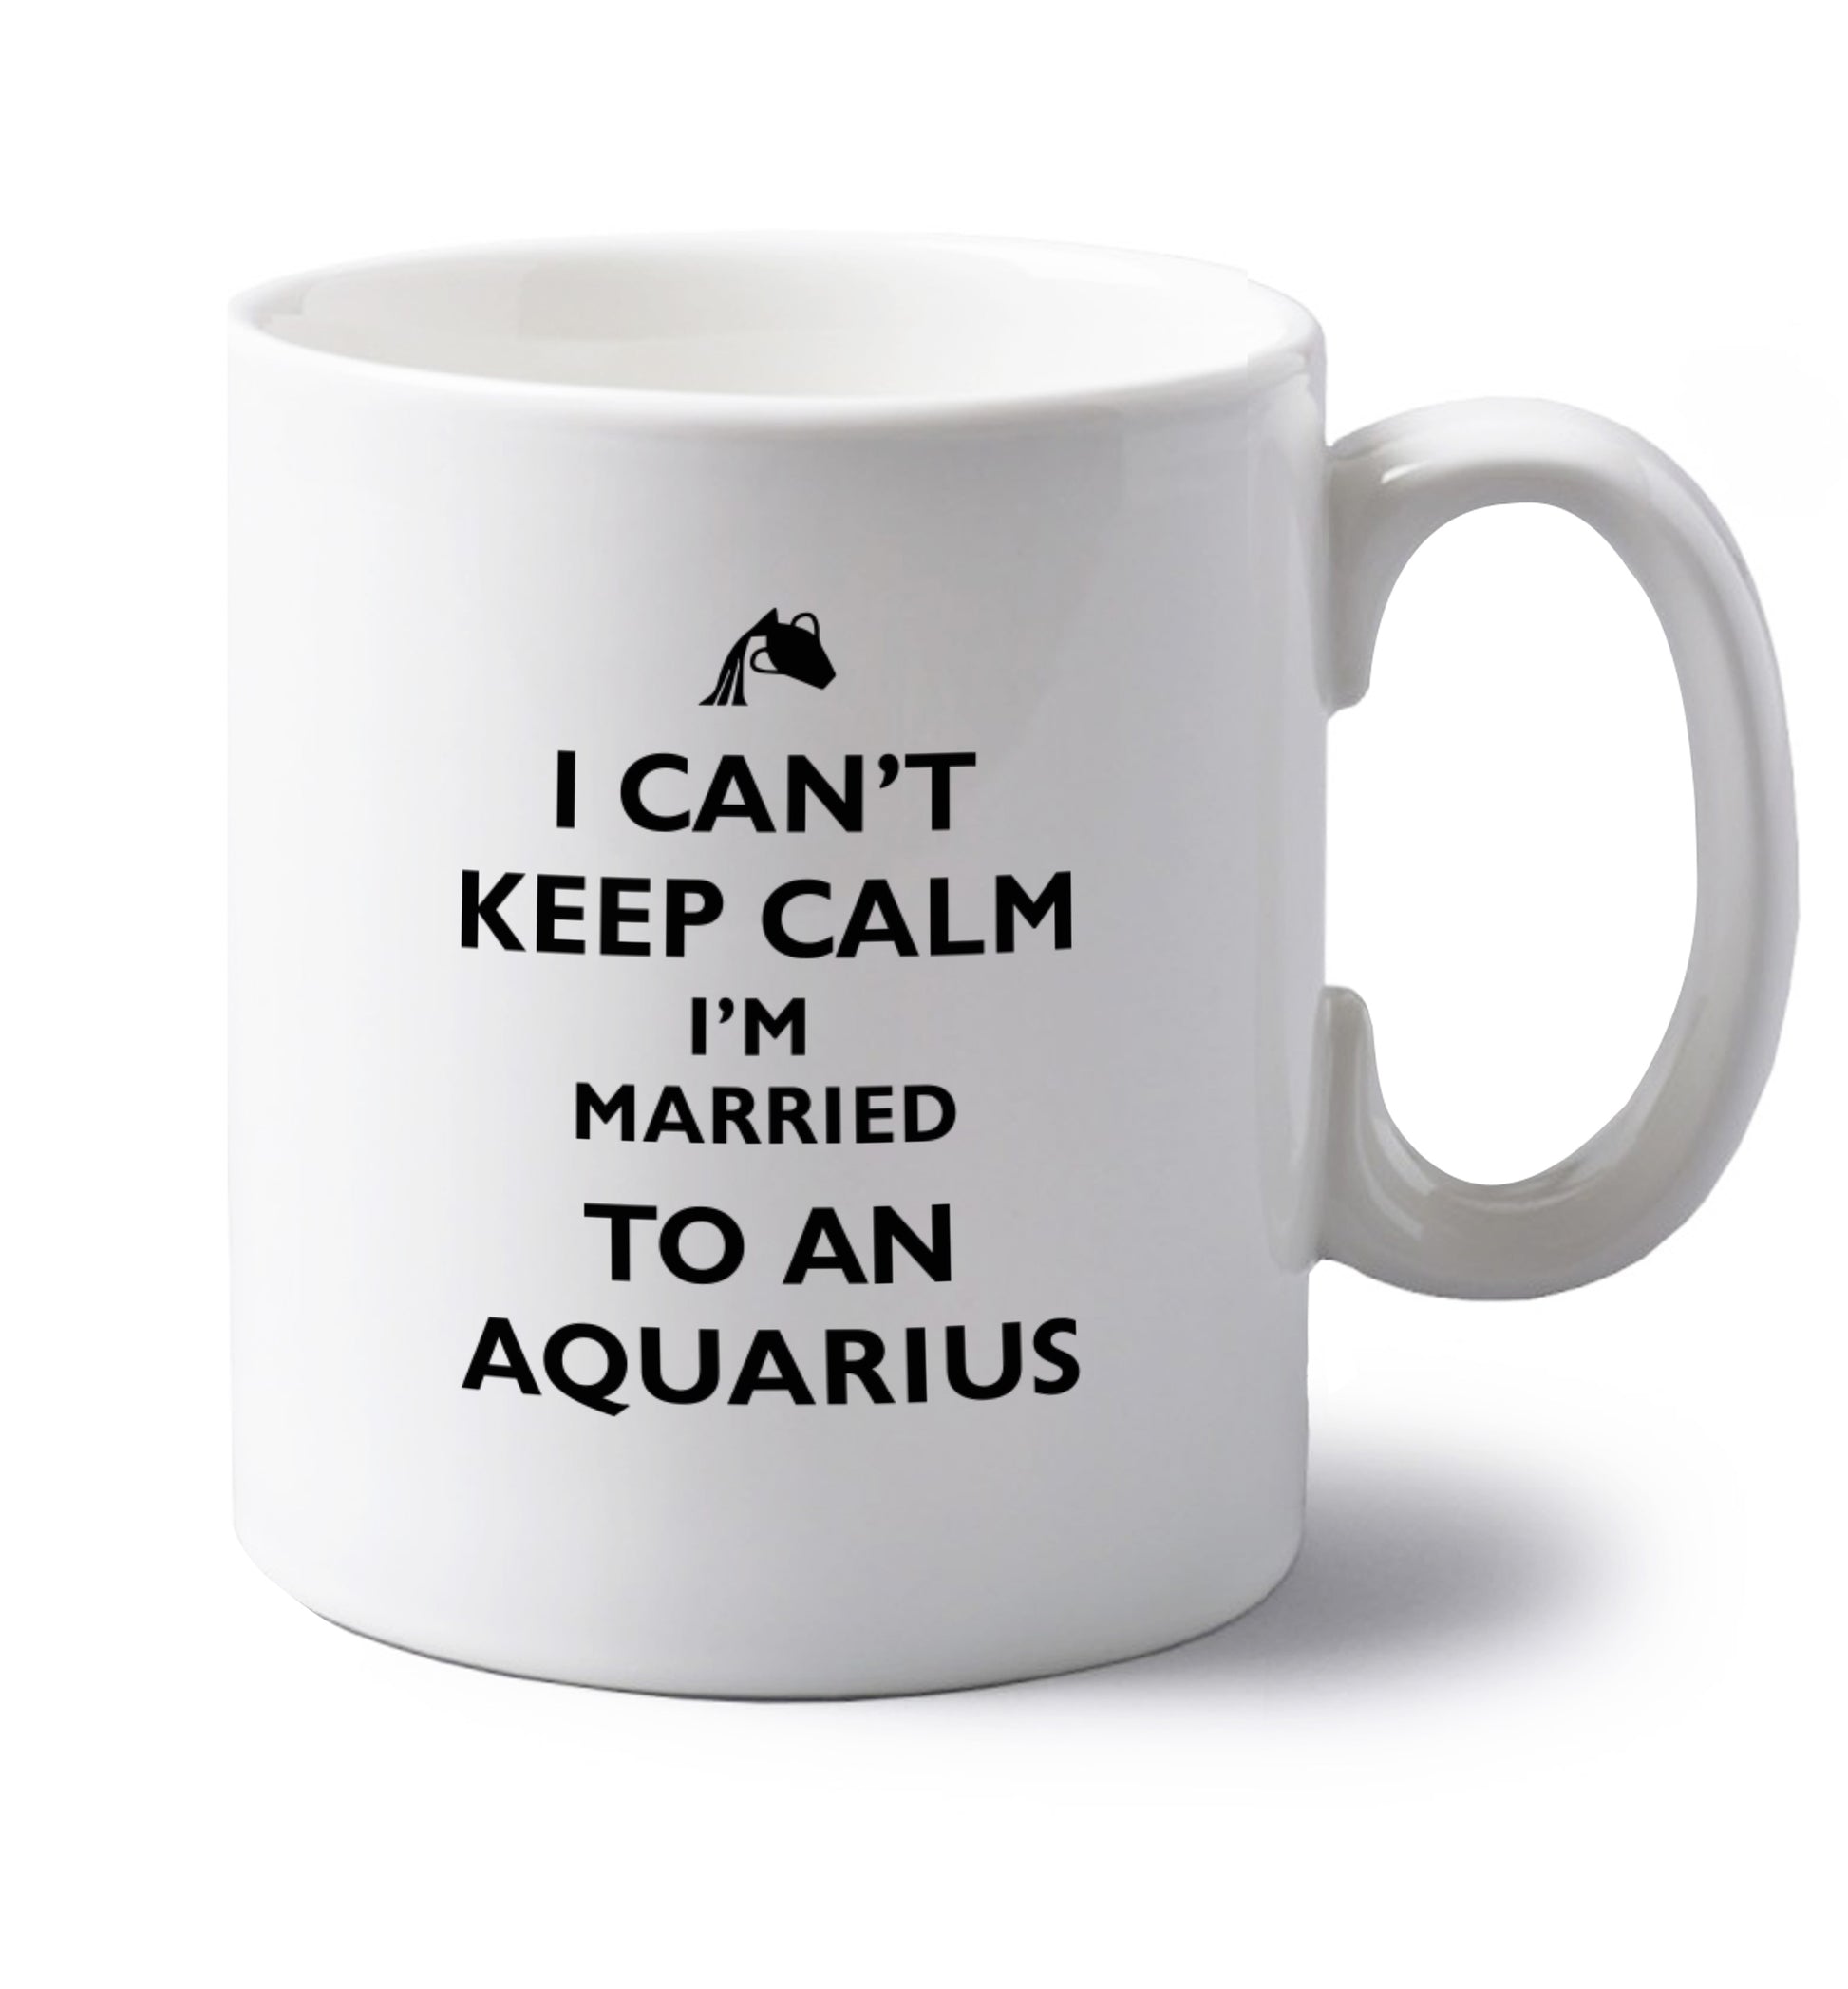 I can't keep calm I'm married to an aquarius left handed white ceramic mug 